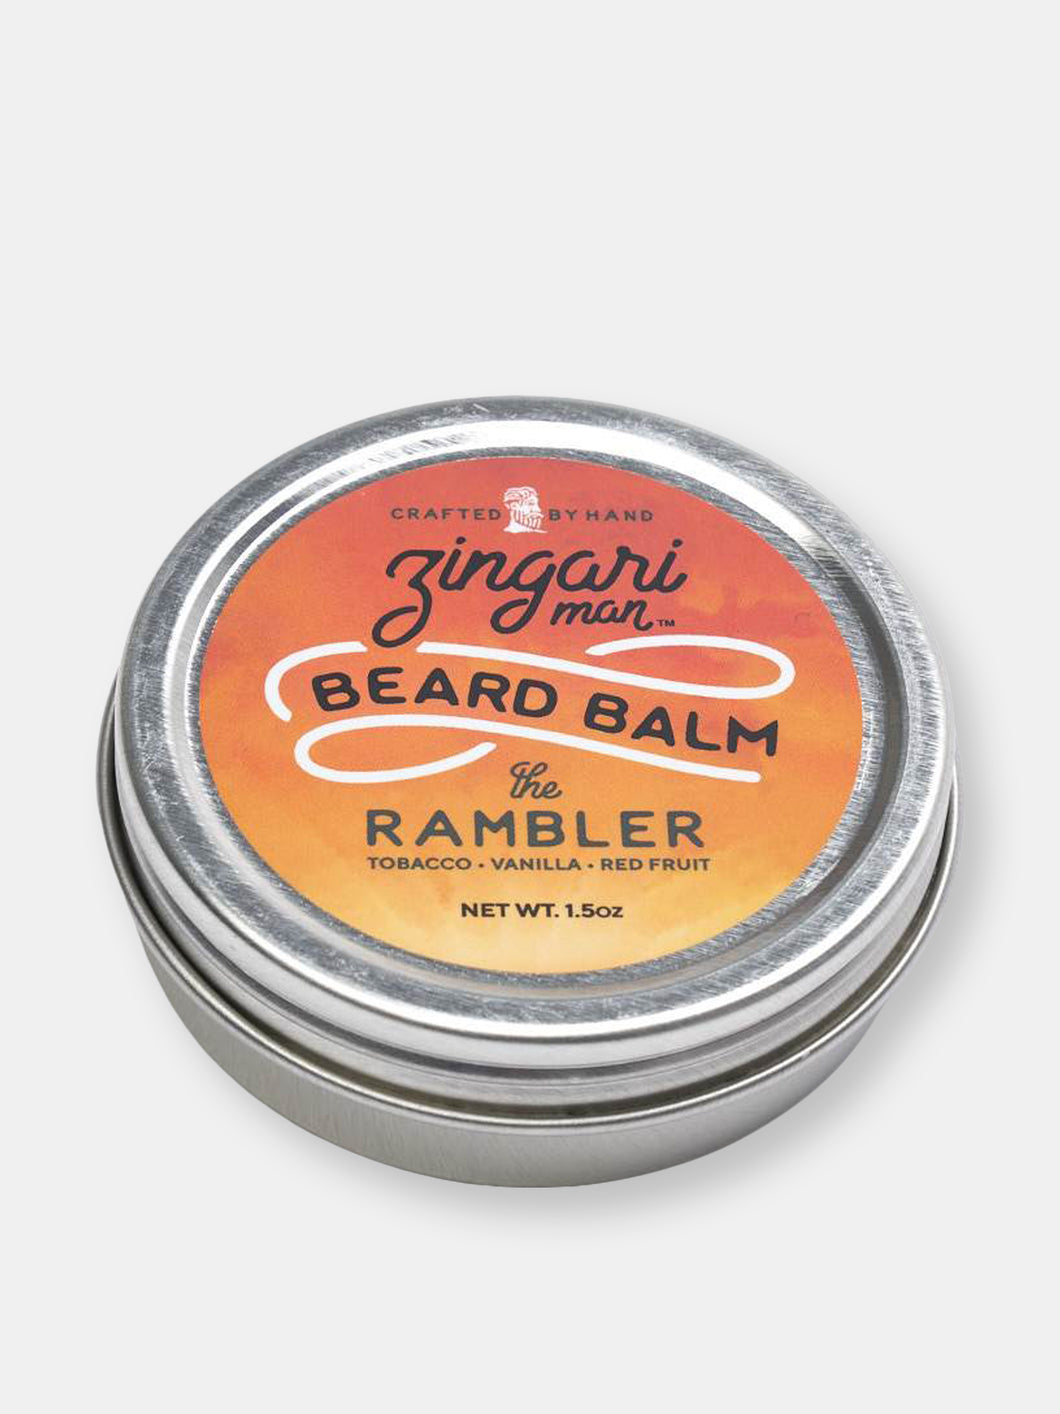 The Rambler beard balm